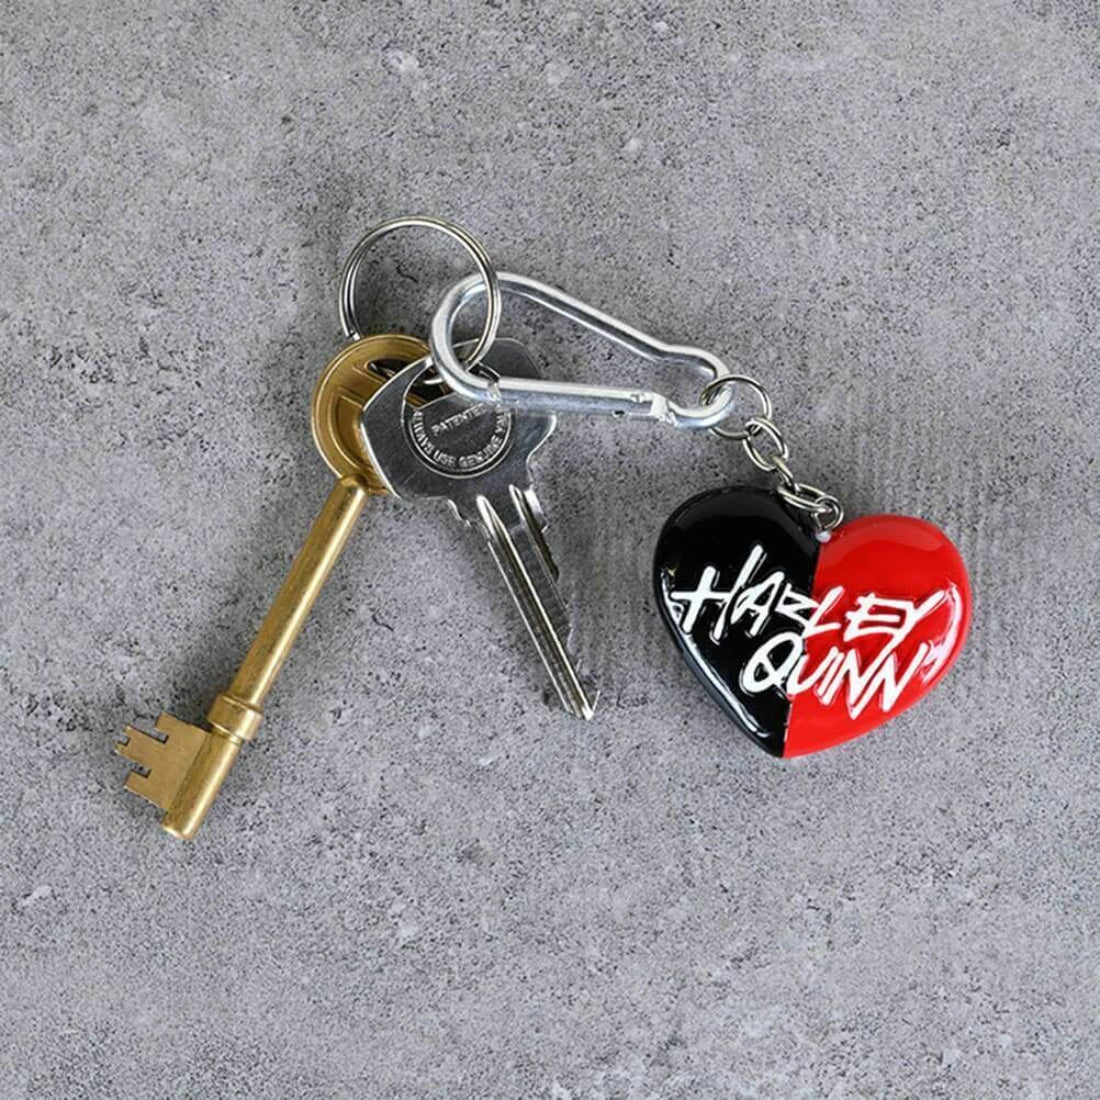 Harley Quinn - Heart 3D Keychain - أكسسوار - Store 974 | ستور ٩٧٤